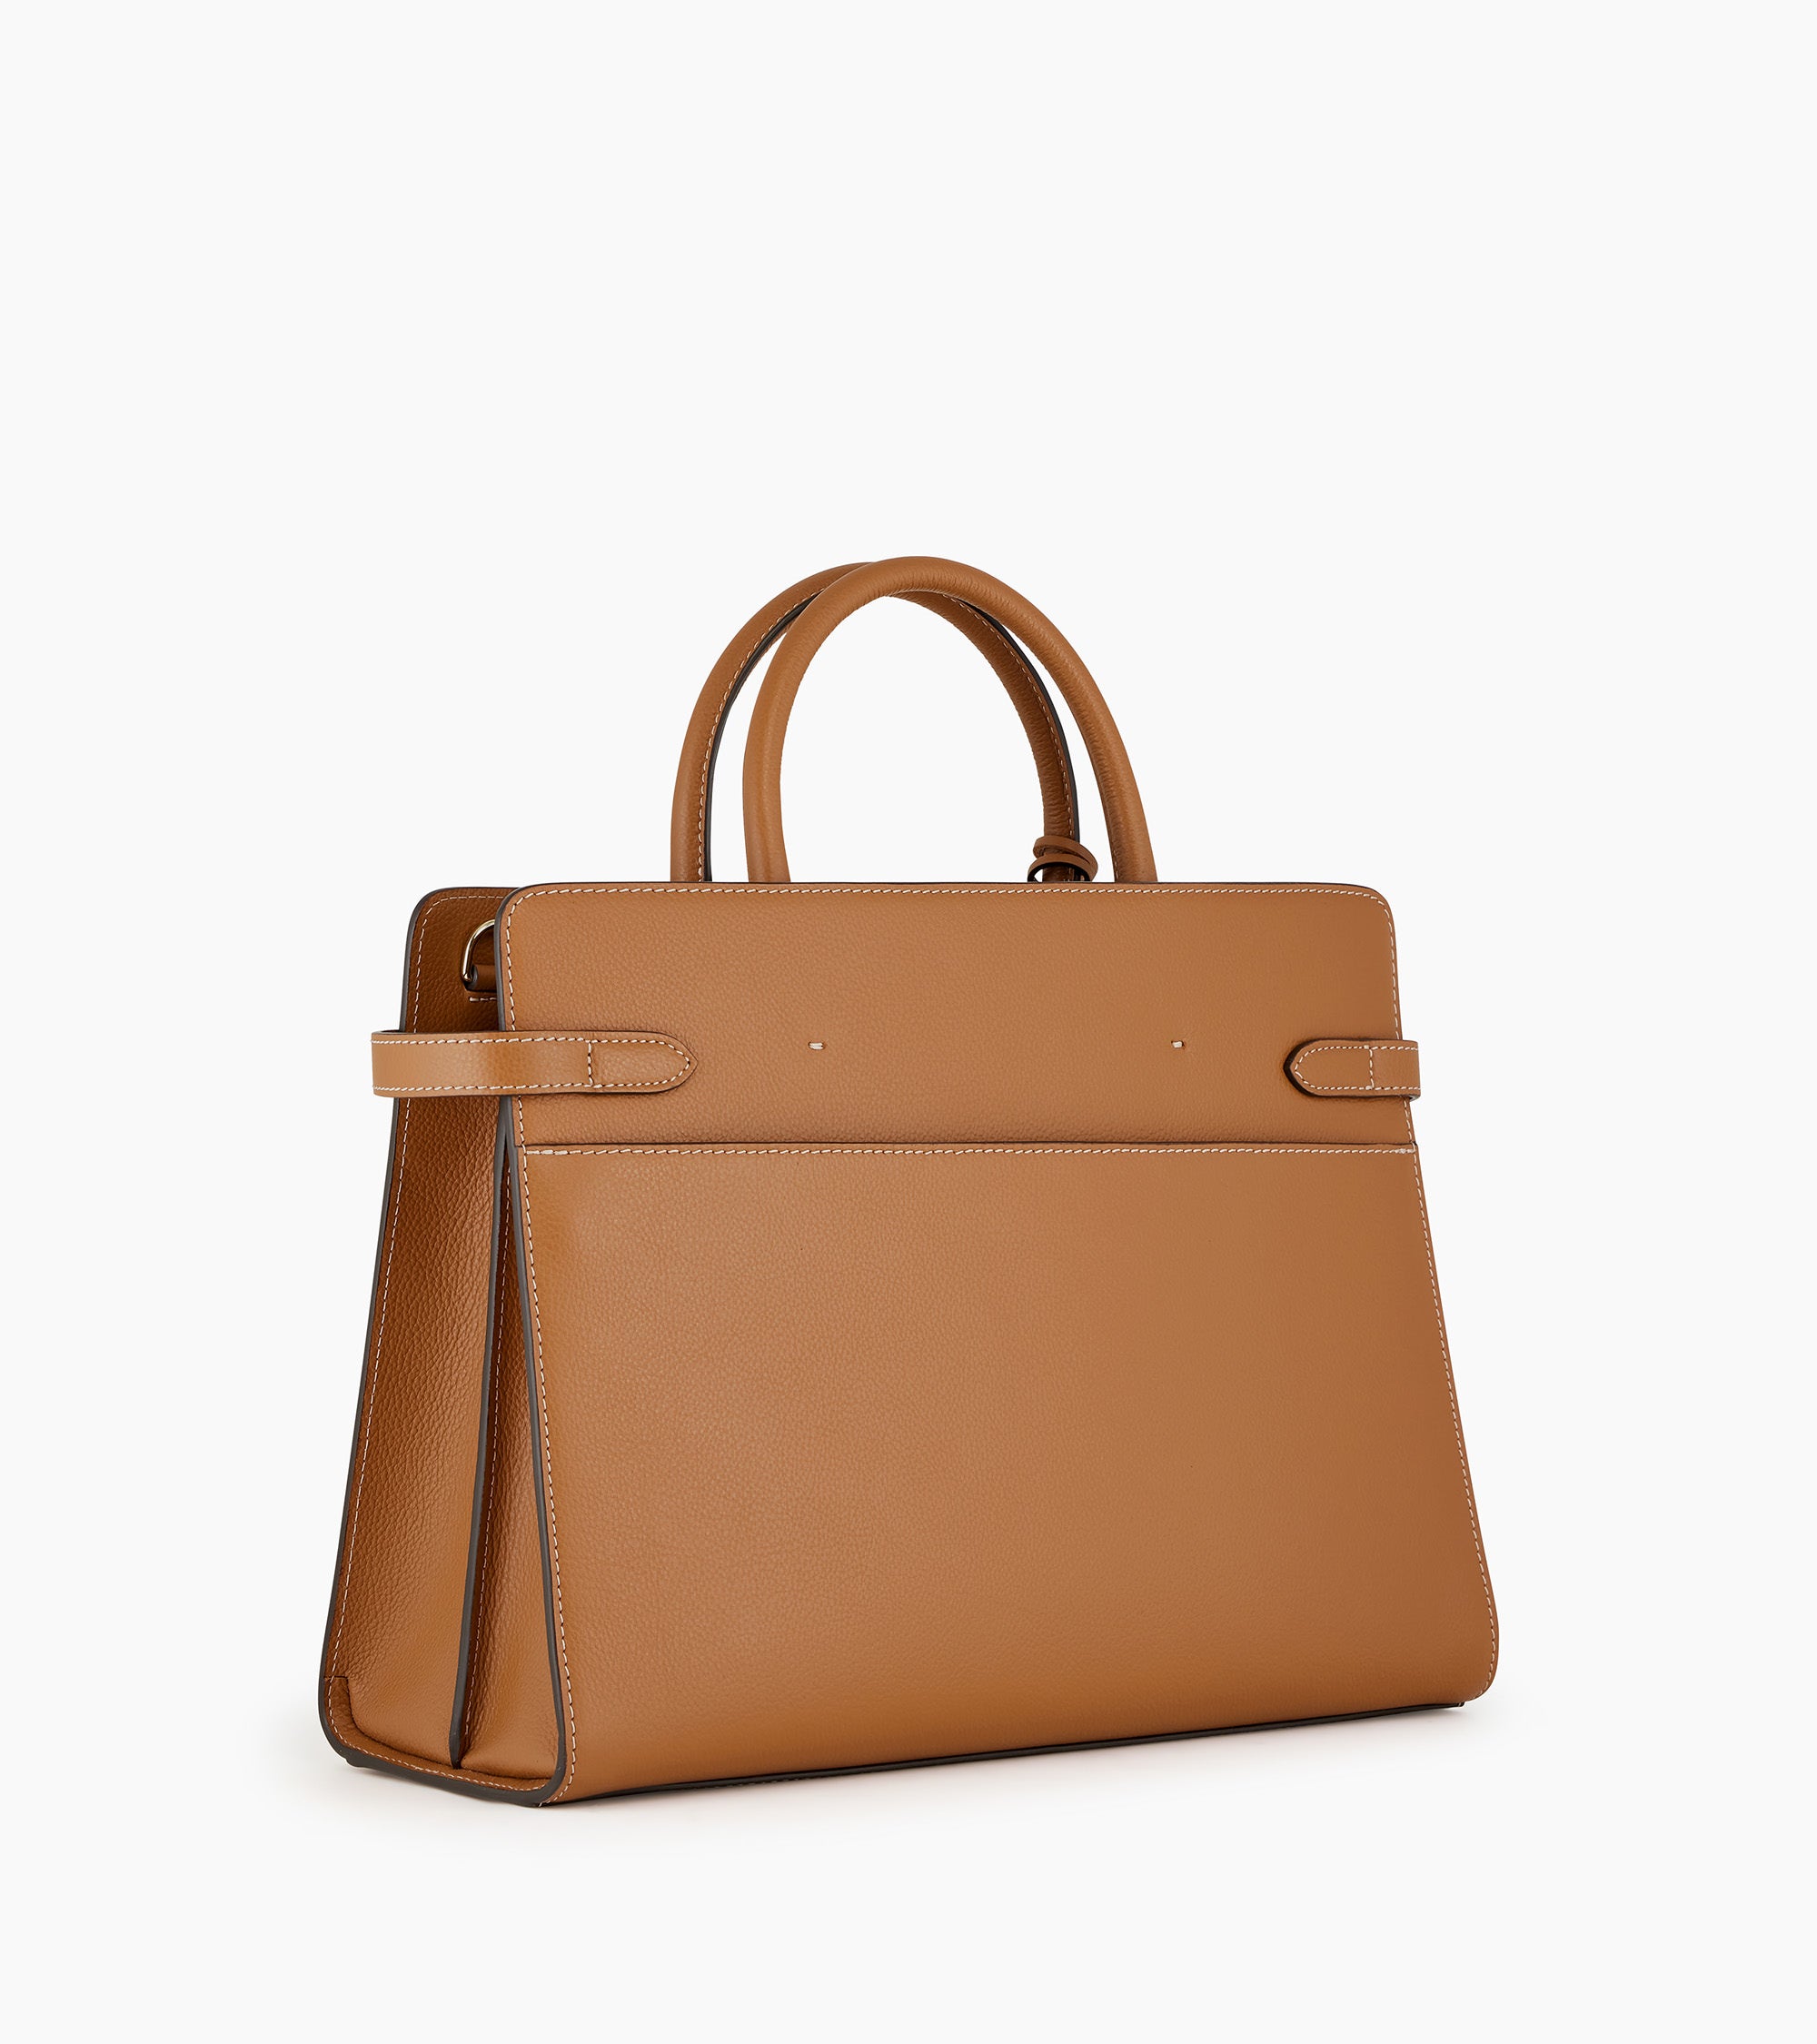 Emilie large handbag in grained leather